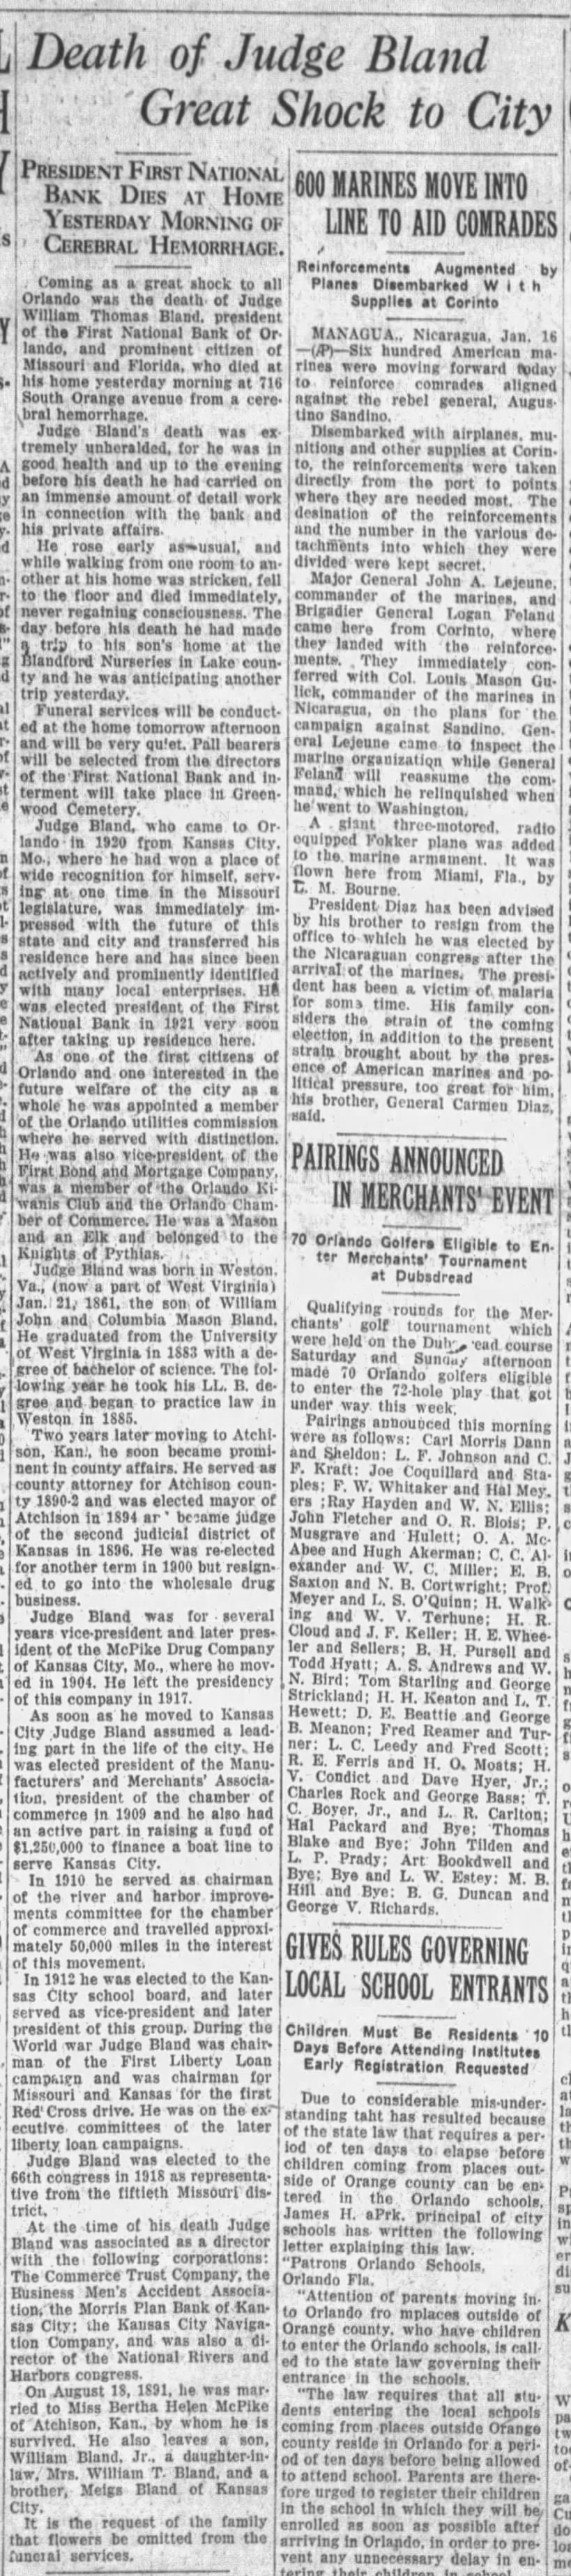 Death of Judge Bland Great Shock to City; 16 Jan 1928; Orlando Evening Star; 1